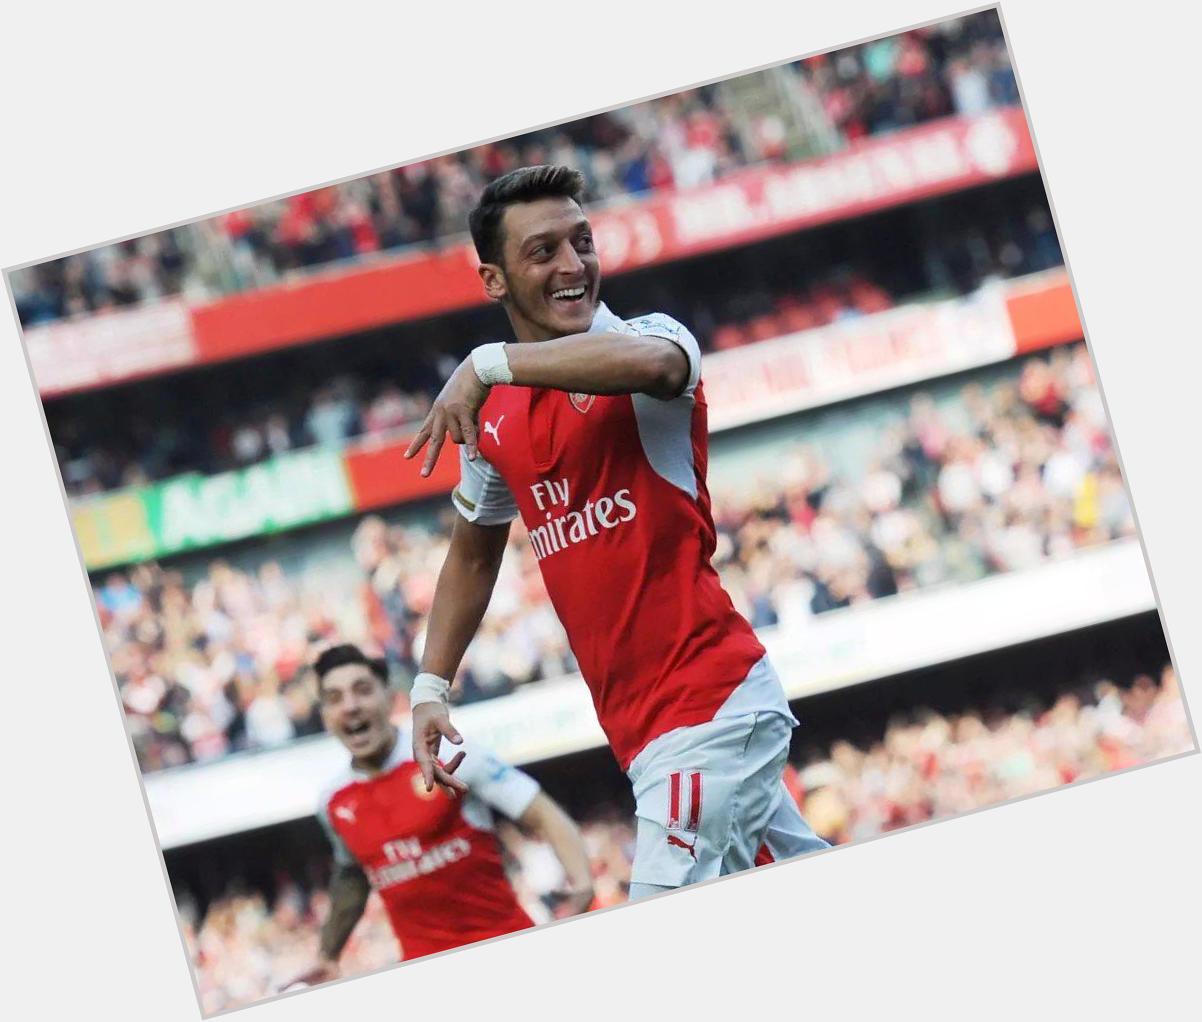 Happy birthday to my favourite Arsenal player, Mesut Ozil. 